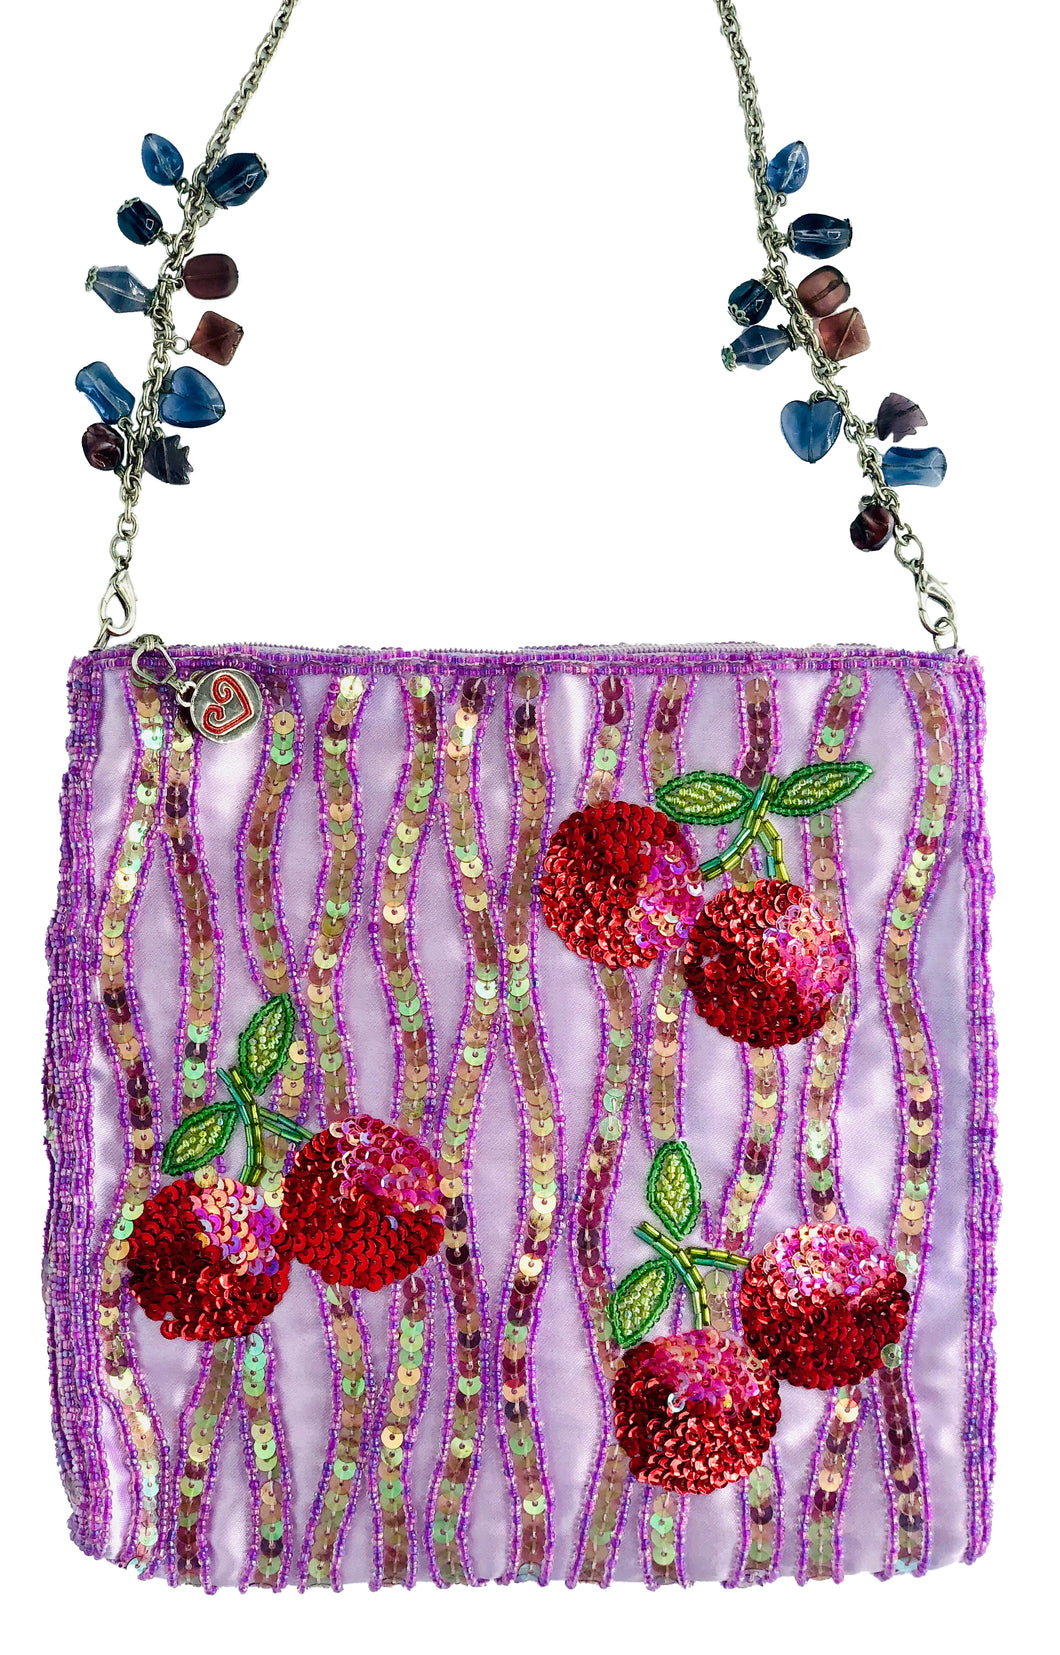 Cherry Sequin Handbag w/ Jewel Strap